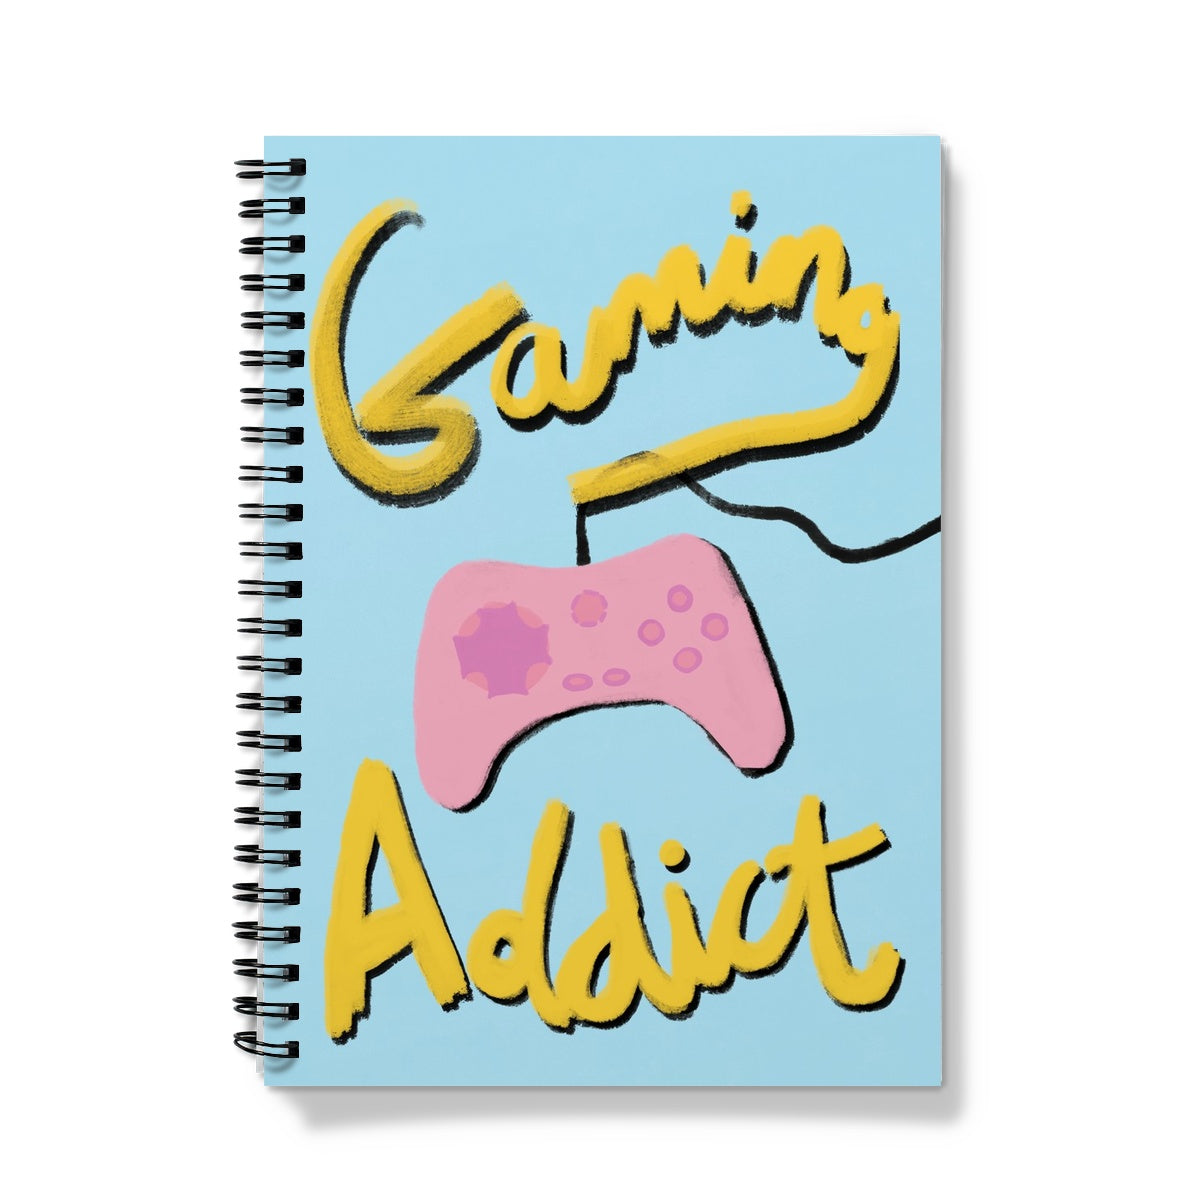 Gaming Addict Print - Light Blue, Yellow, Pink Notebook